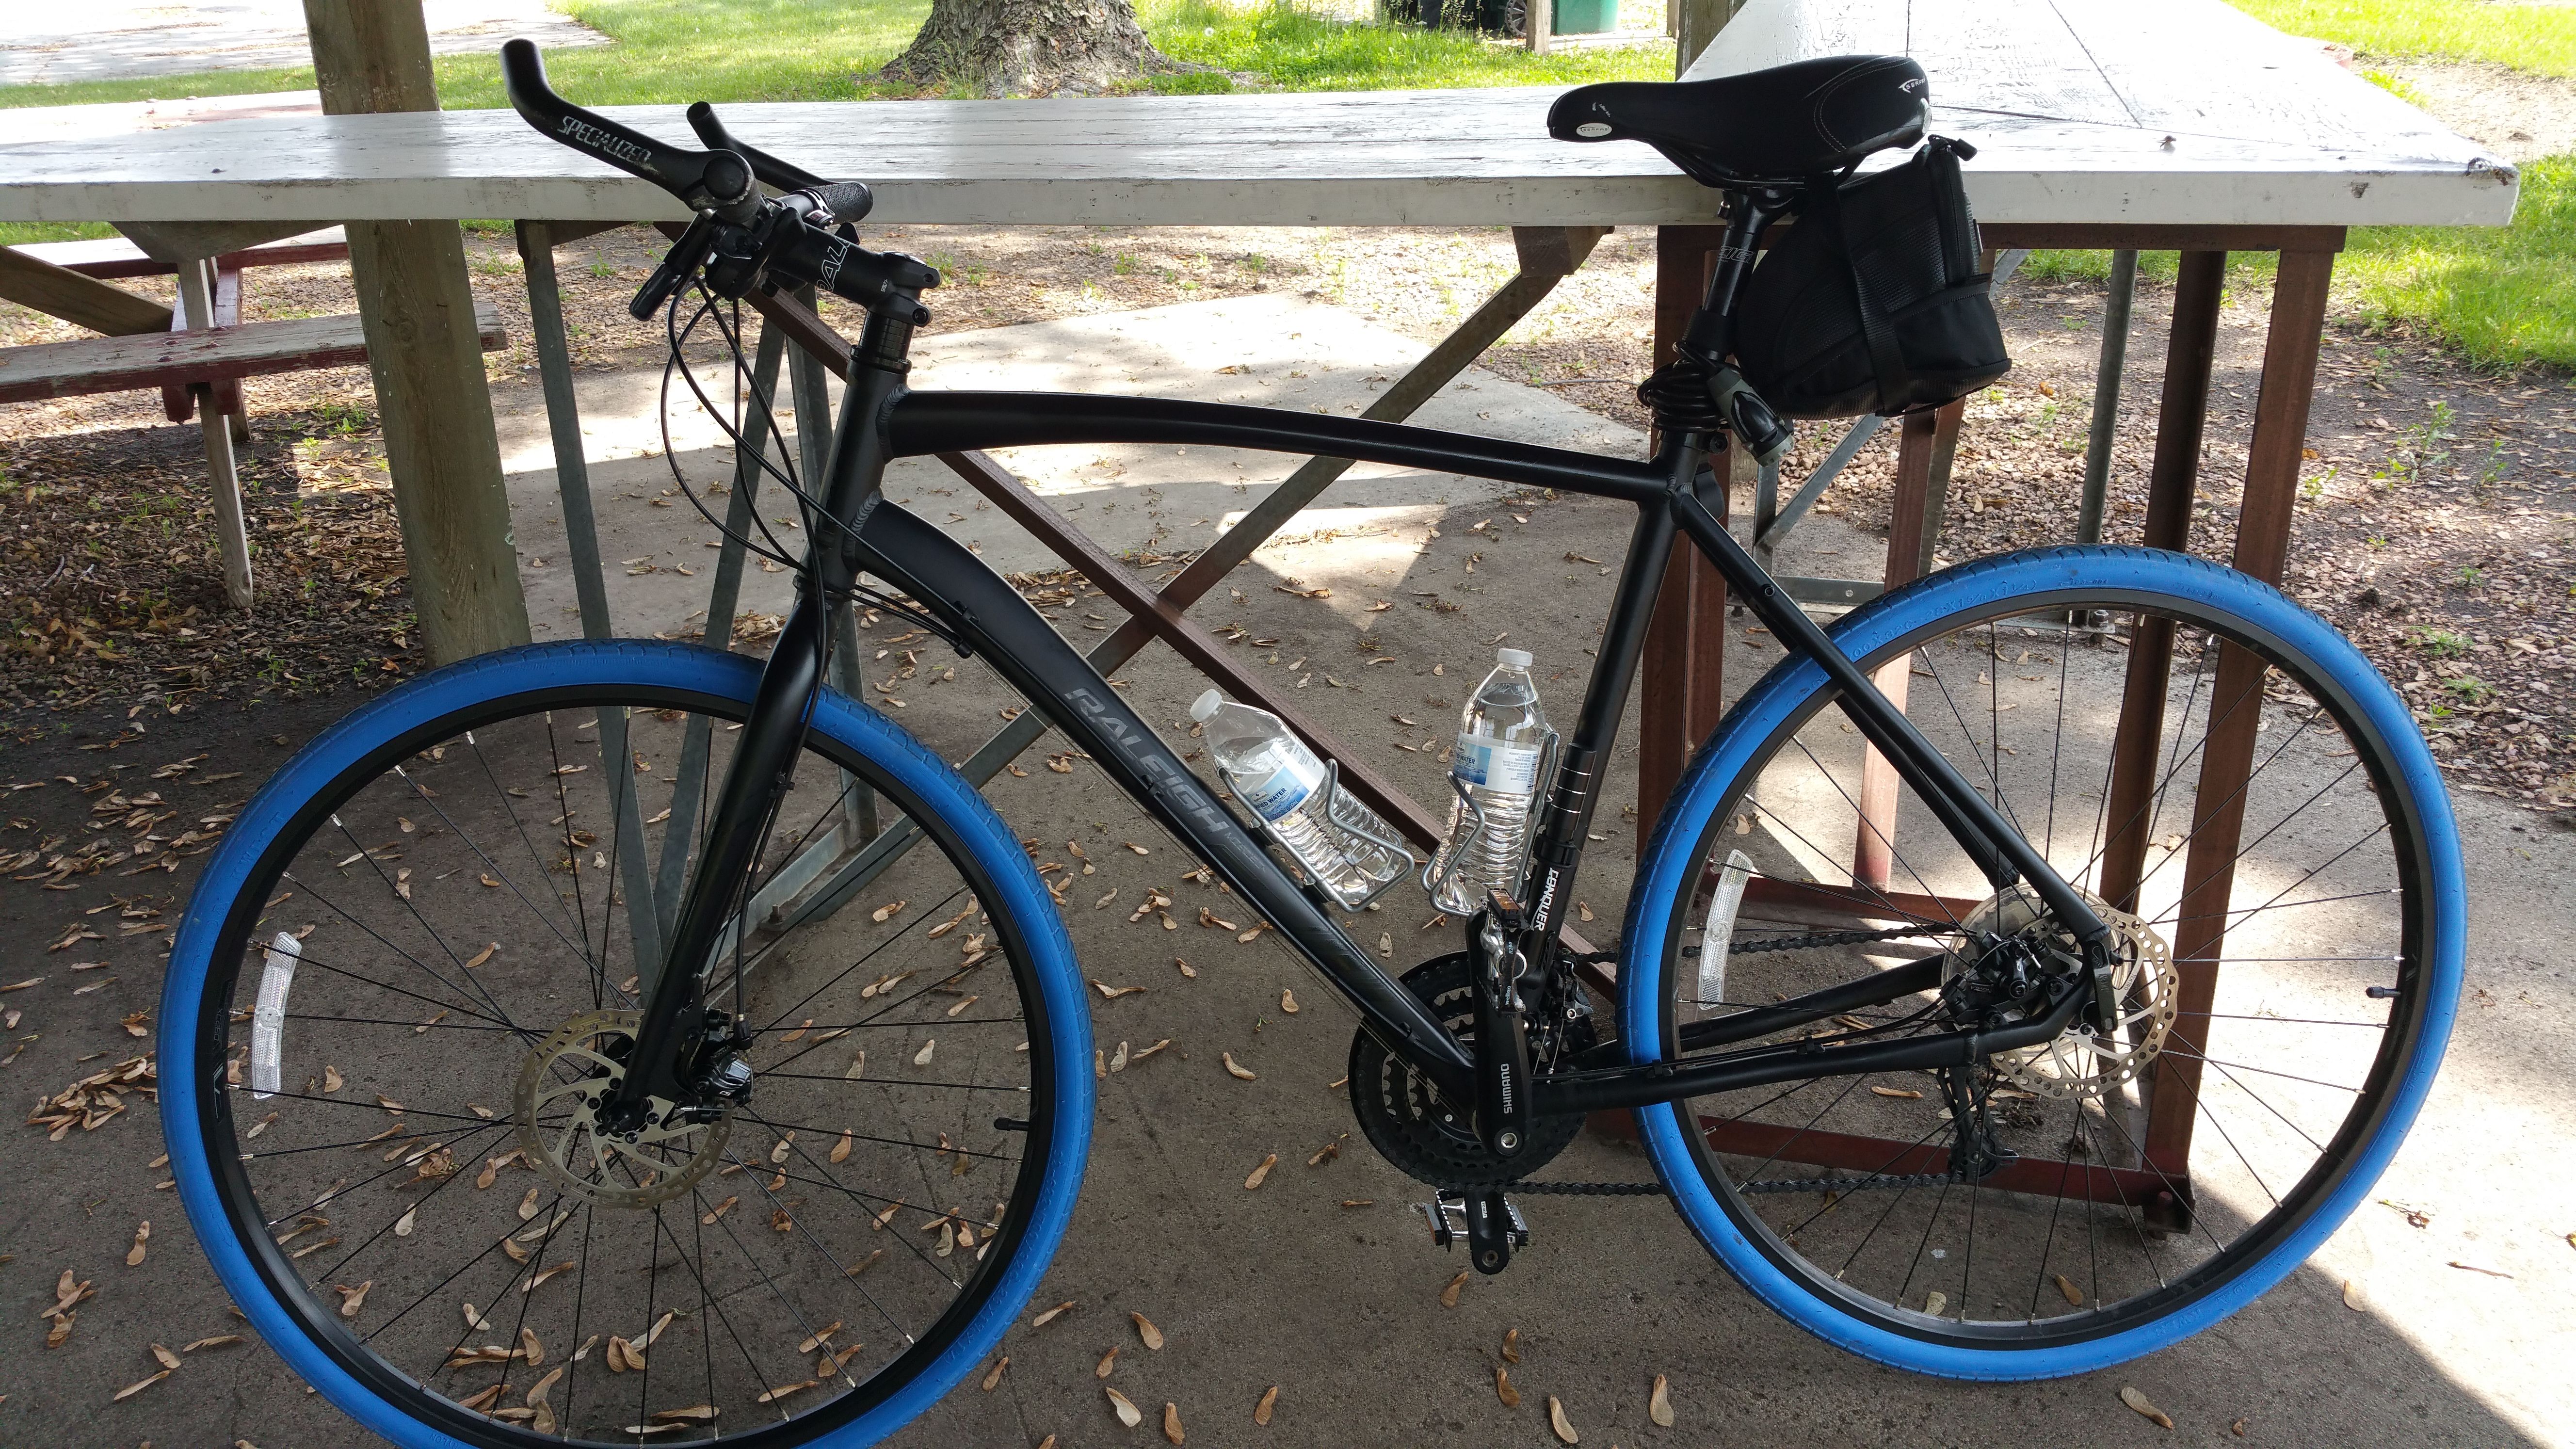 Raleigh Misceo 2.0 Bike with Kenda blue tires | Biking | Pinterest